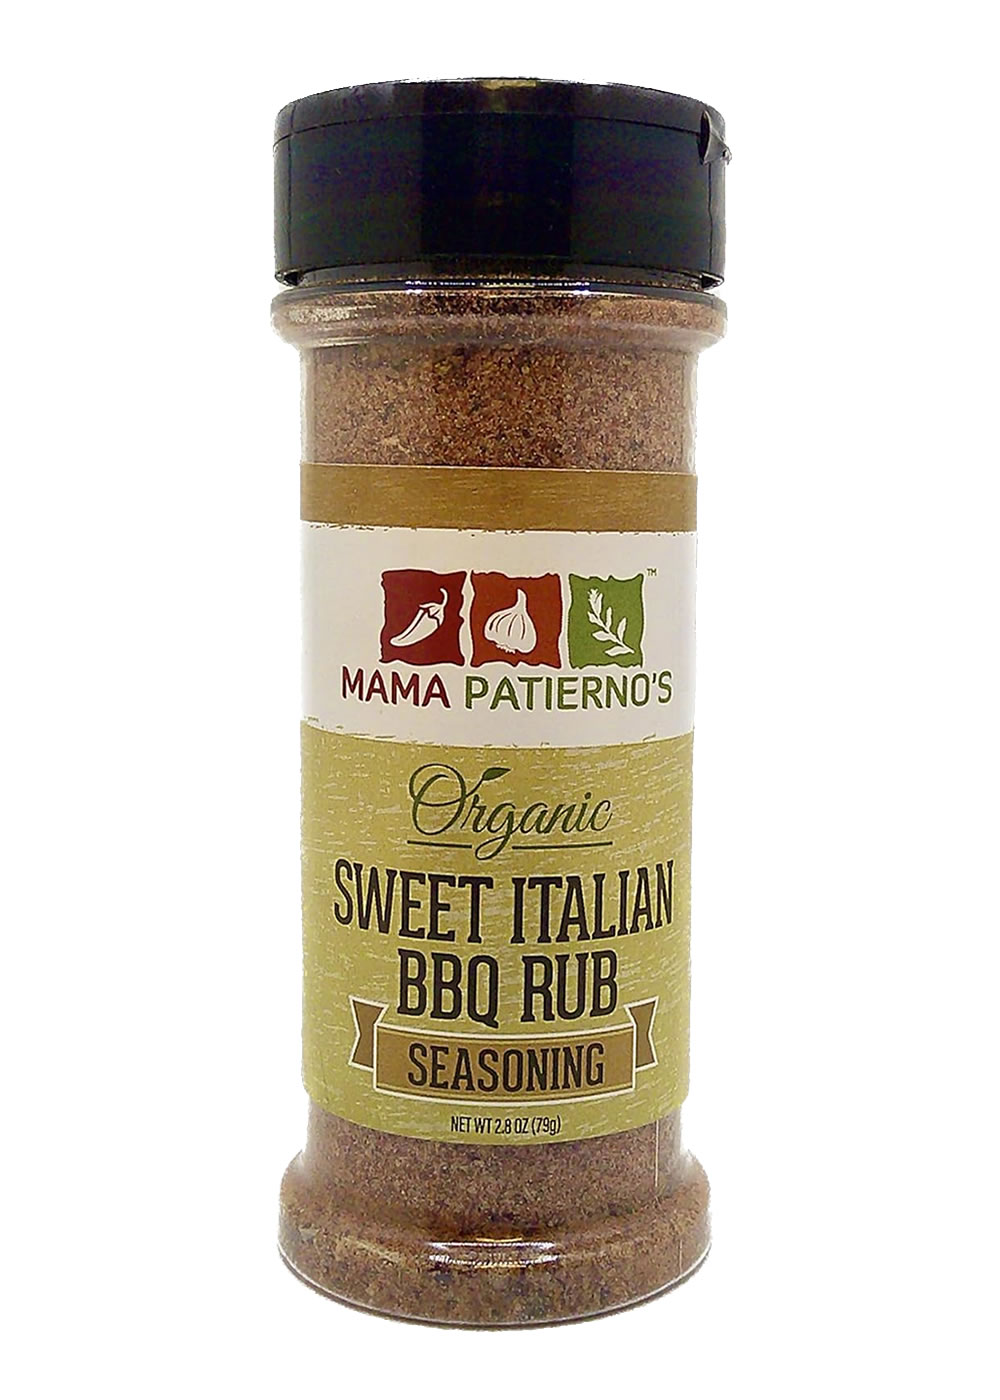 Mama Patierno's Organic Sweet Italian BBQ Rub Front bottle Image.